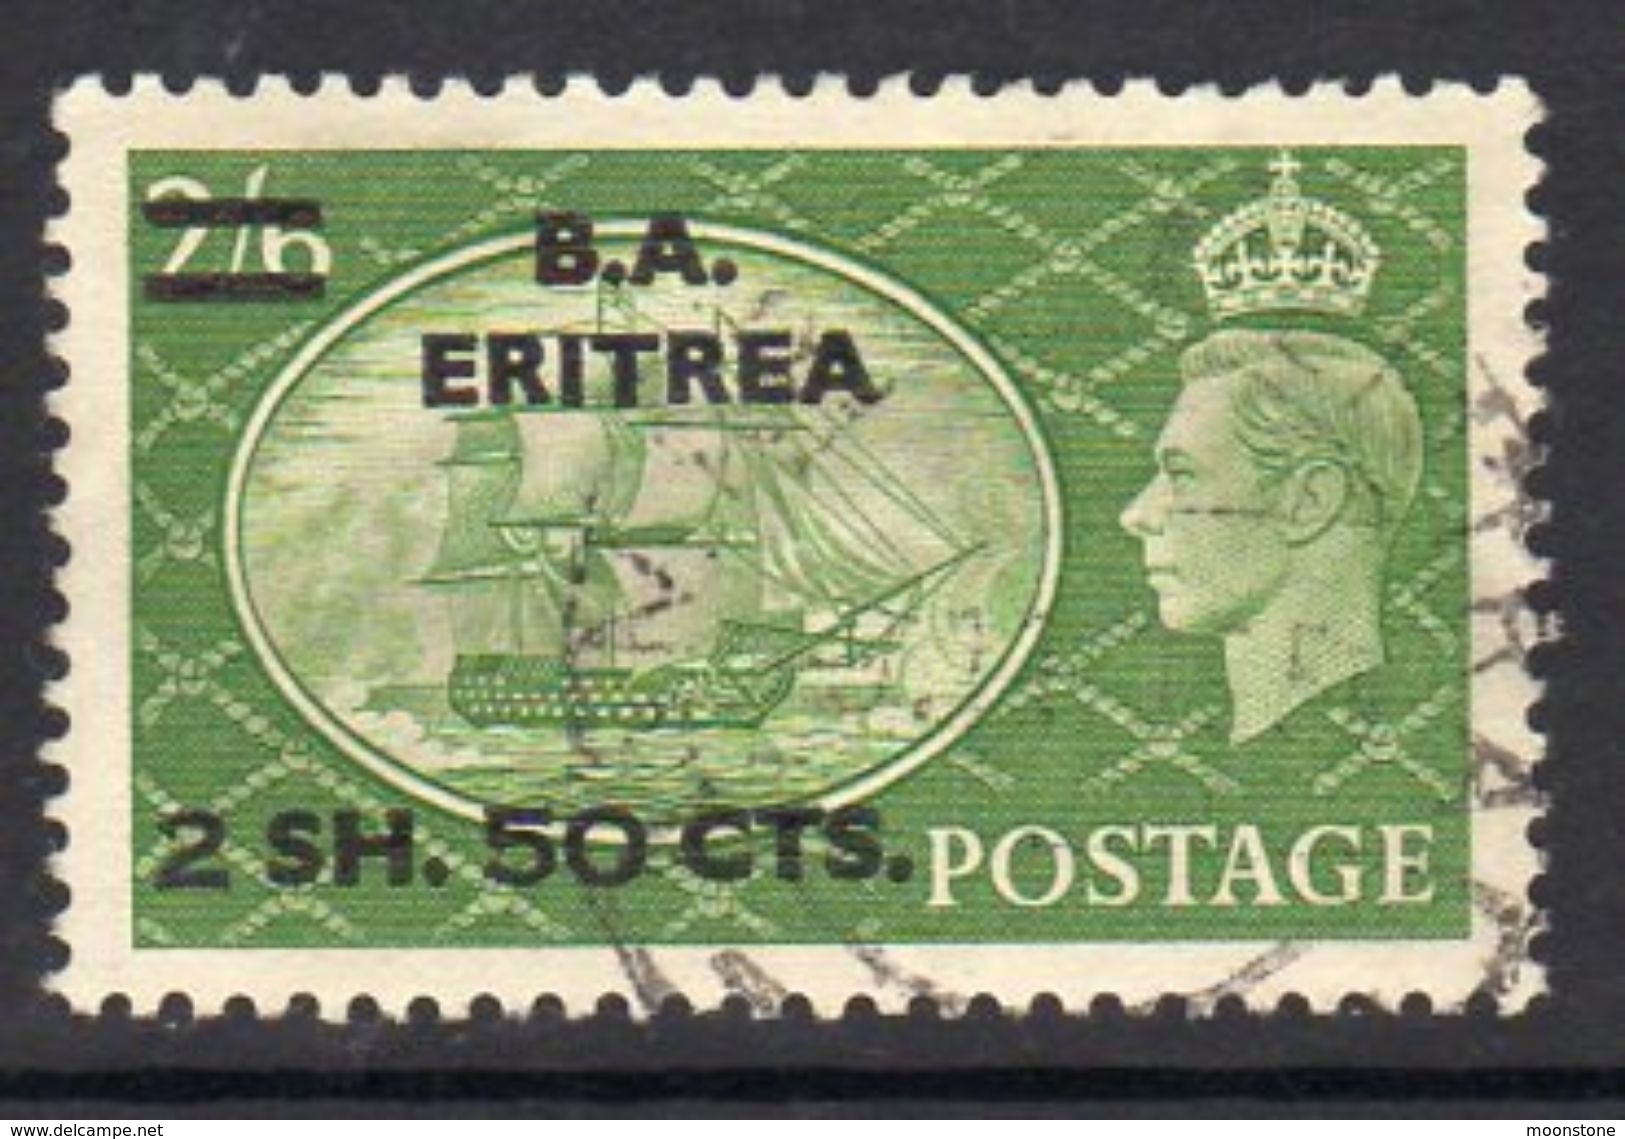 BOIC, BA Eritrea 1951 2s.50 On 2/6d Overprint On GB, Used, SG E30 (A) - Eritrea